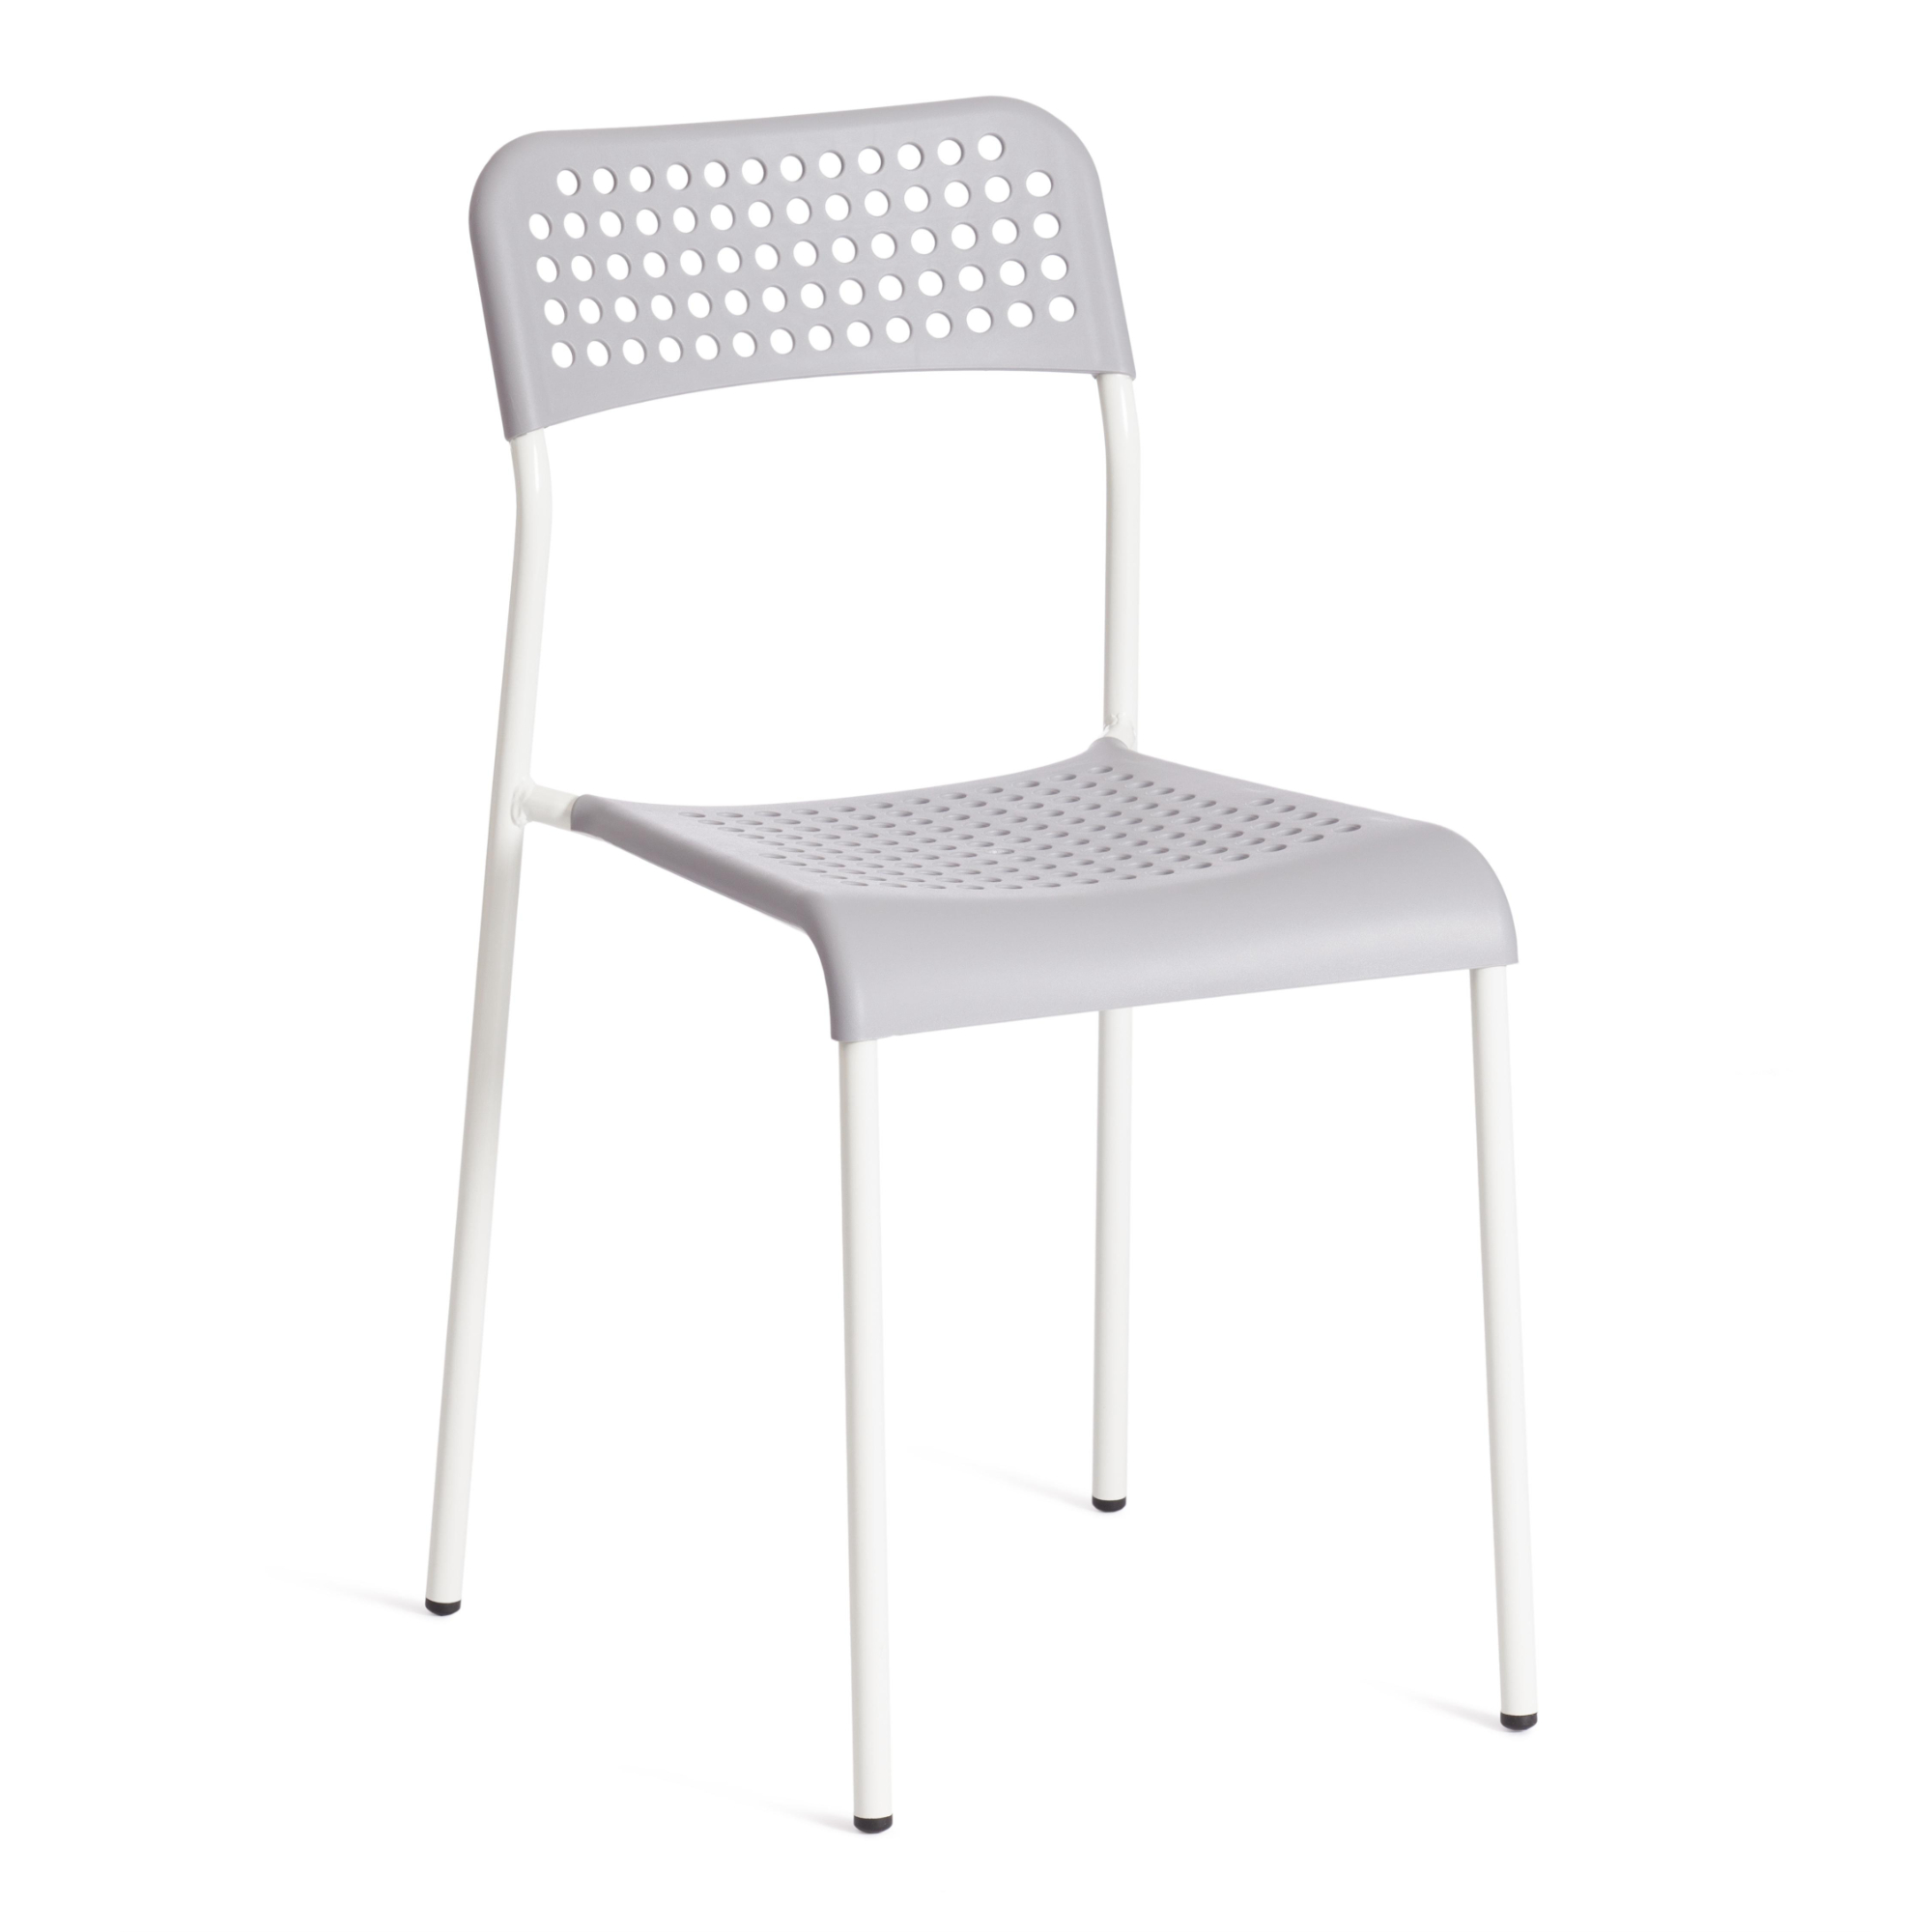 Стул ТС Adde серый пластиковый с металлическими ножками 39х49х78 см стул тс cindy chair пластиковый с ножками из бука бежевый 45х51х82 см